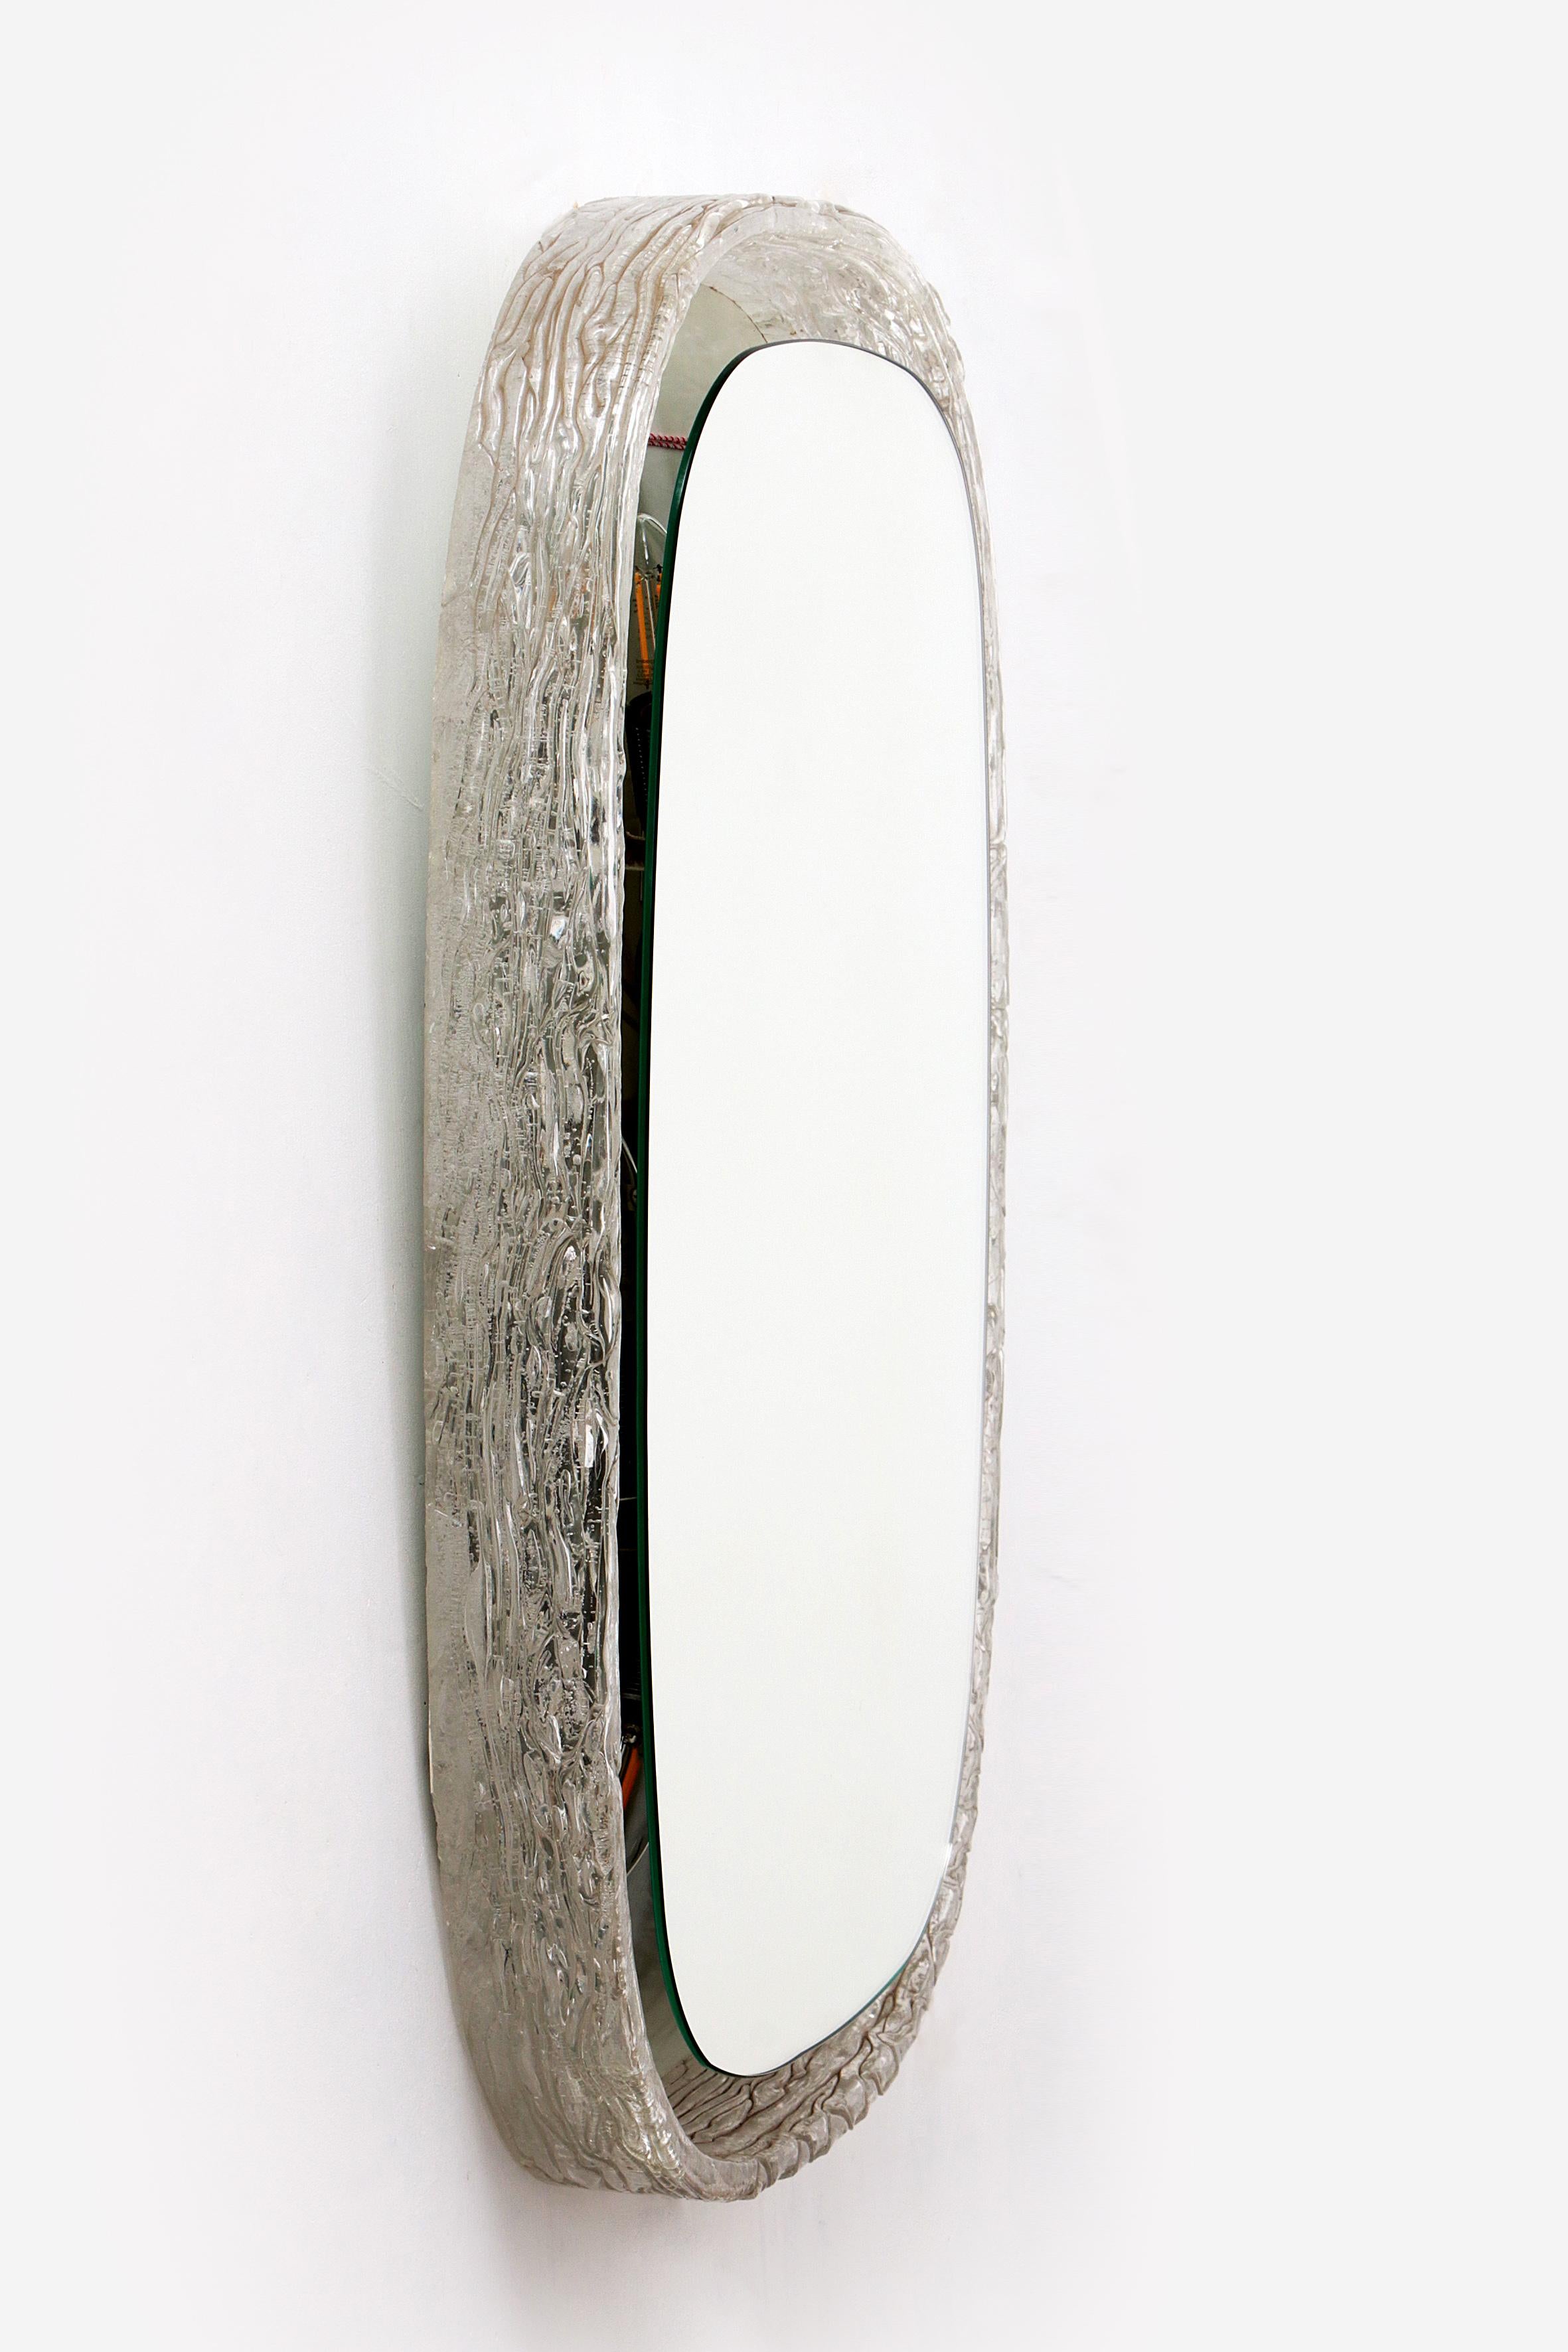 Mid-Century Modern Hillebrand Vintage Oval Illuminated Wall Mirror Plexiglass 1960s Germany For Sale